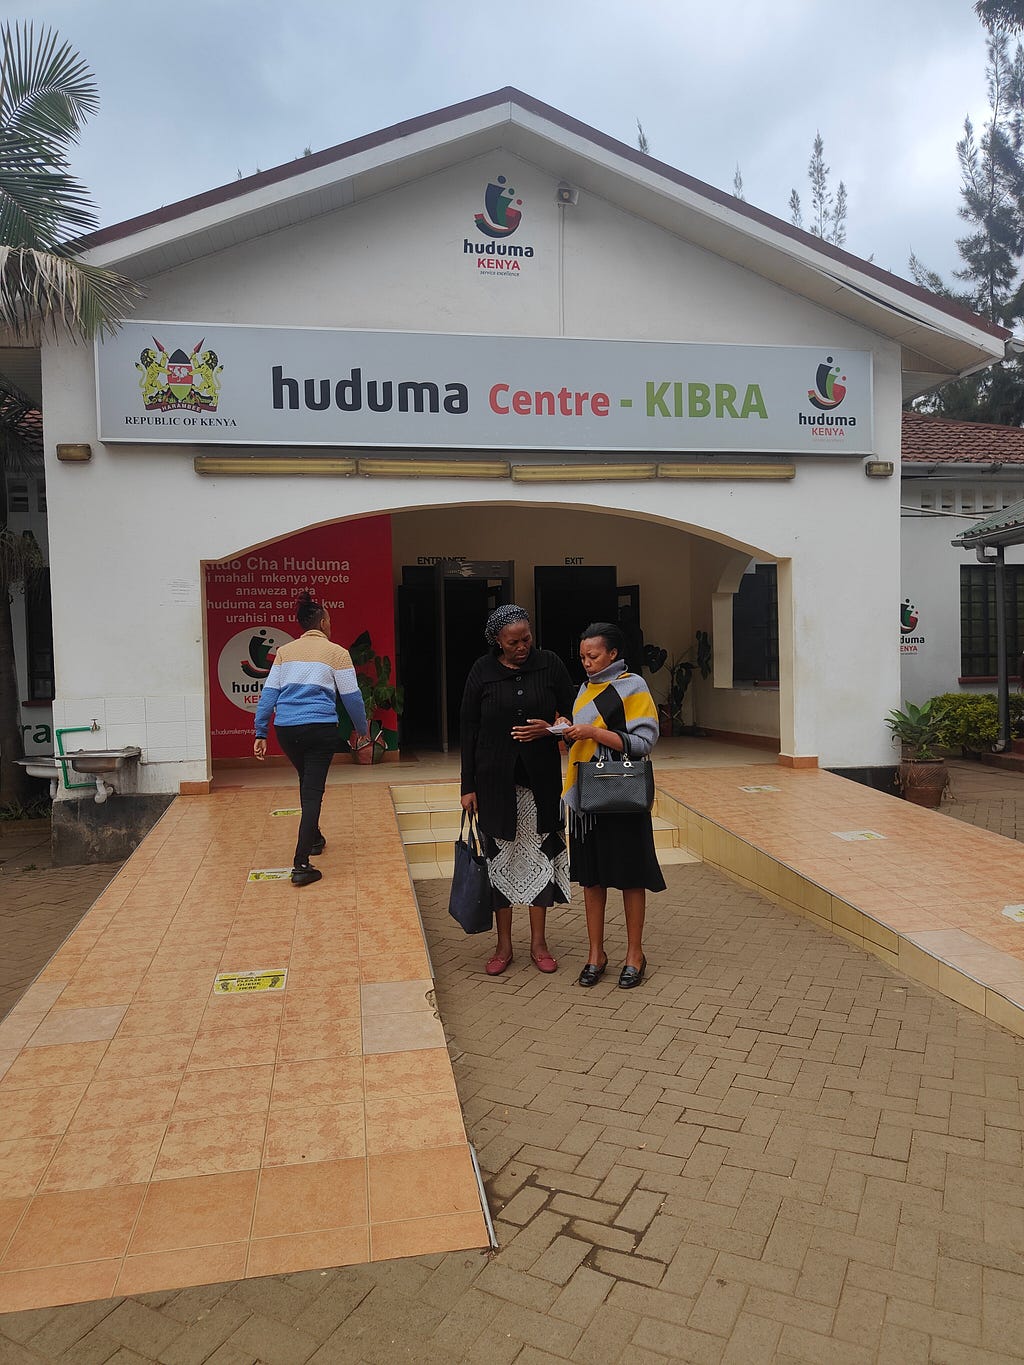 Huduma Centre at the bustling Kibera neighbourhood / Huduma Centre at the bustling Central Business Disctrict neighbourhood in Nairobi. Photo: Author